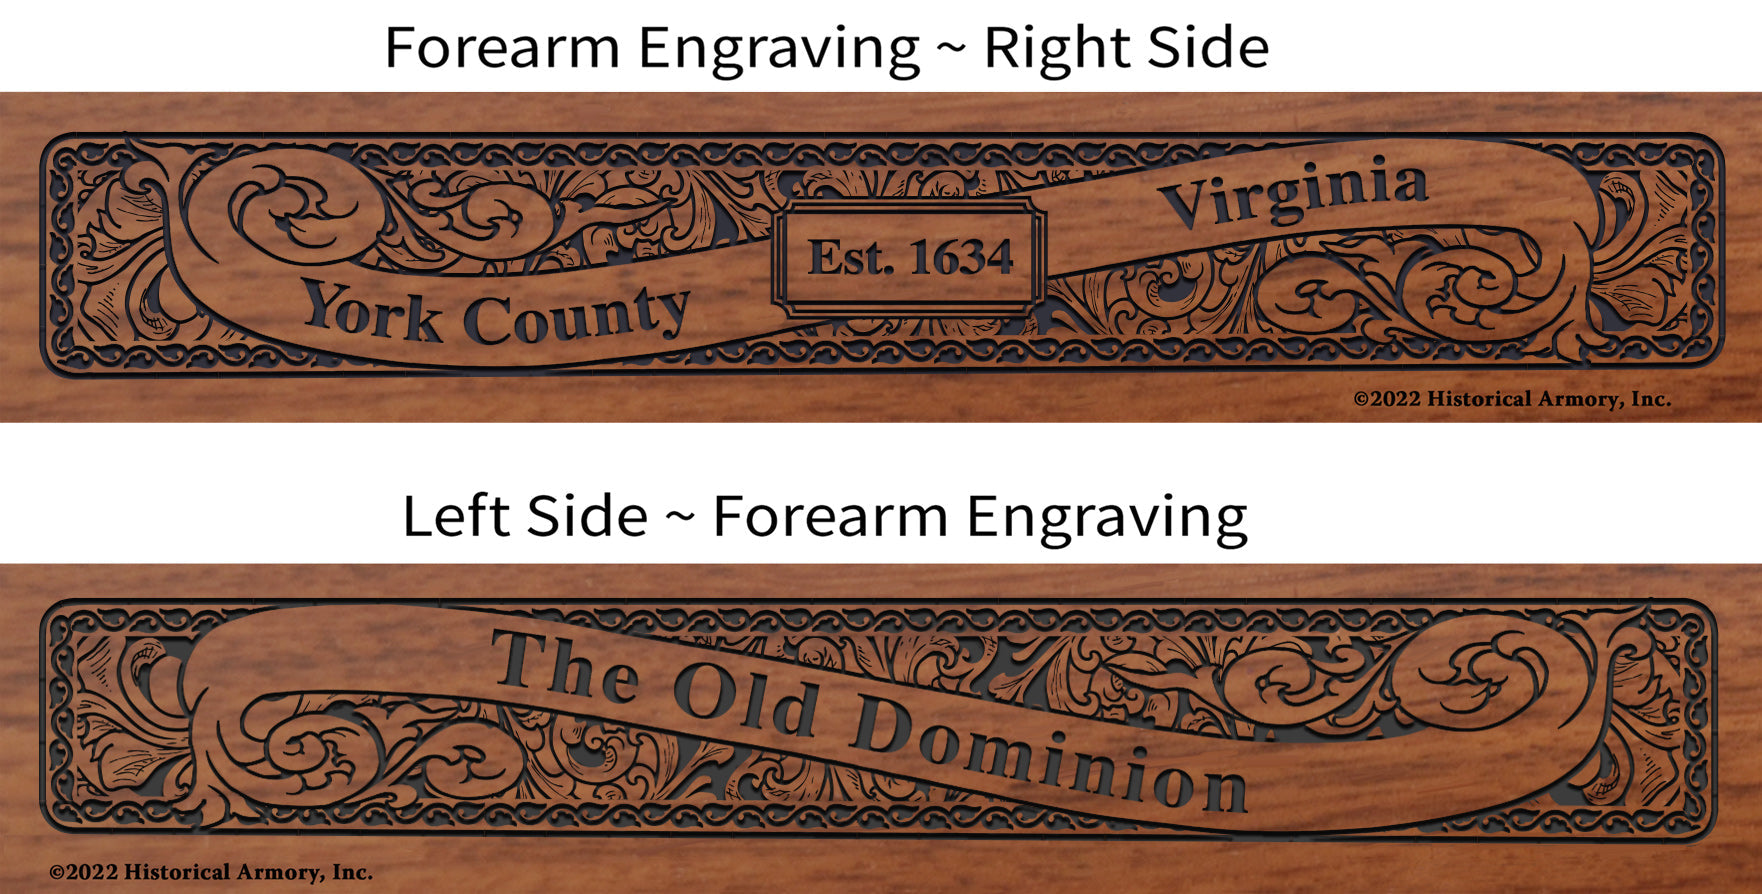 York County Virginia Engraved Rifle Forearm